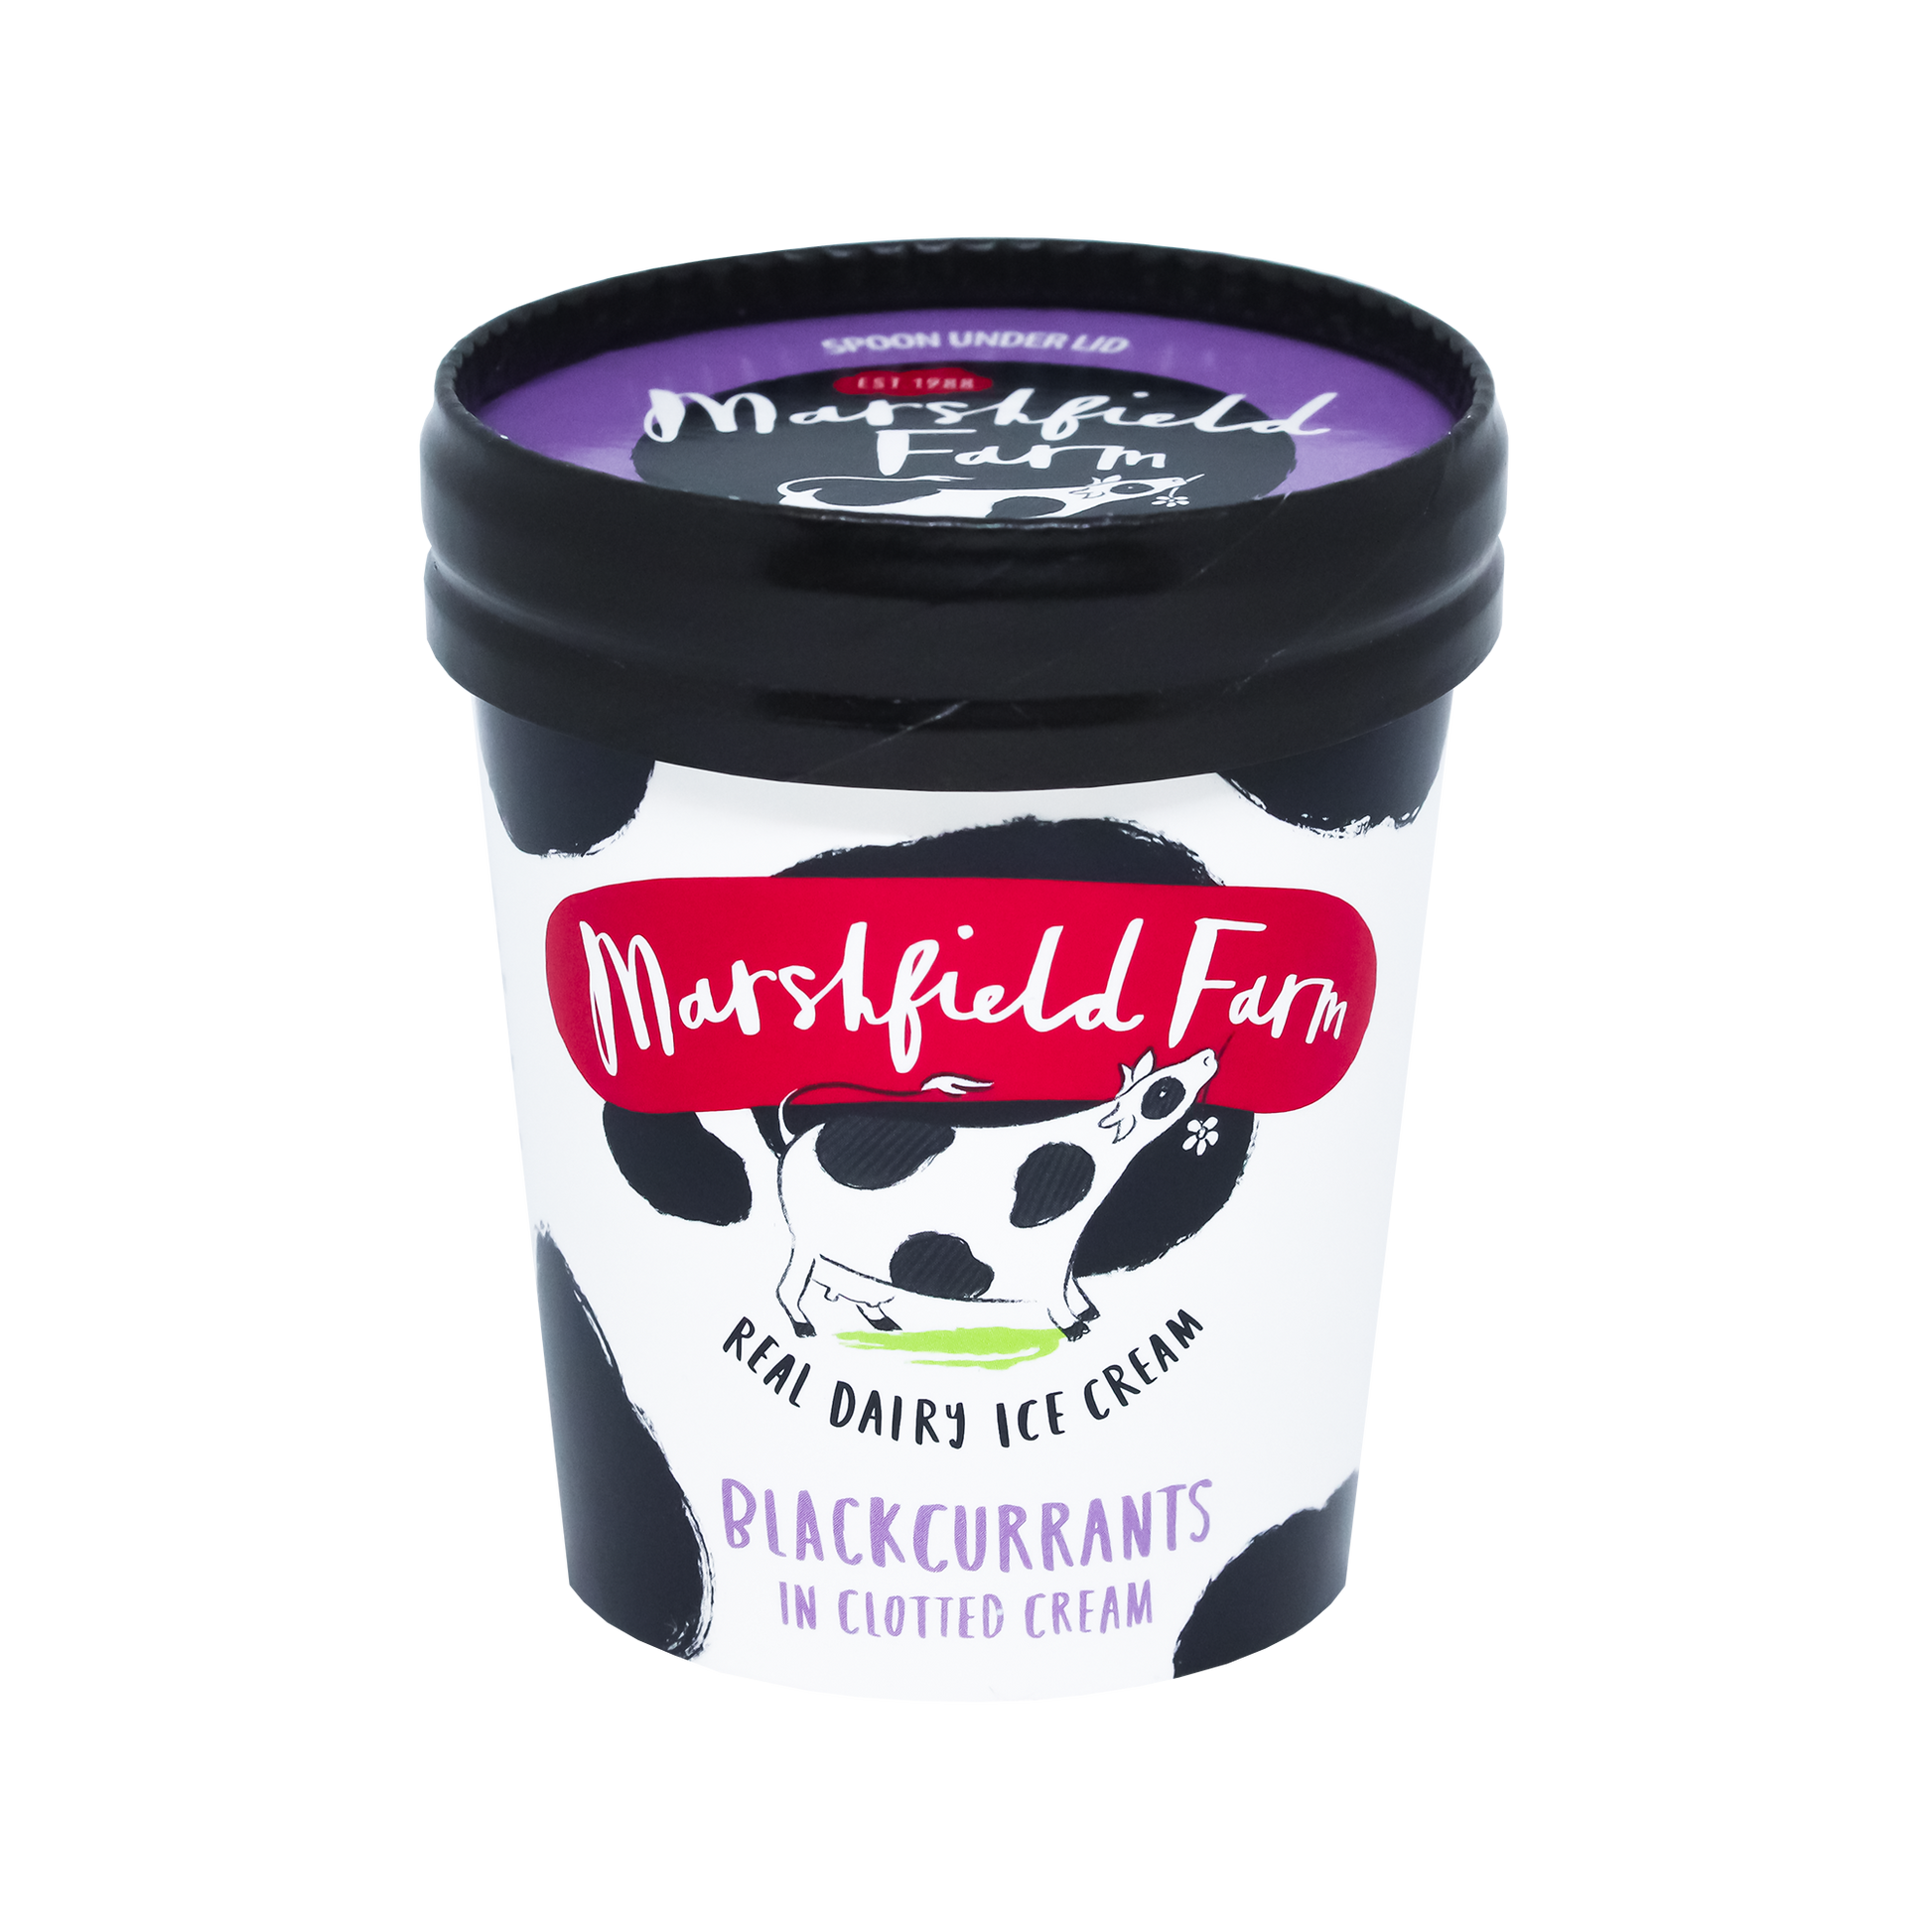 Marshfield Farm Blackcurrants in Clotted Cream Ice Cream 125ml Tub